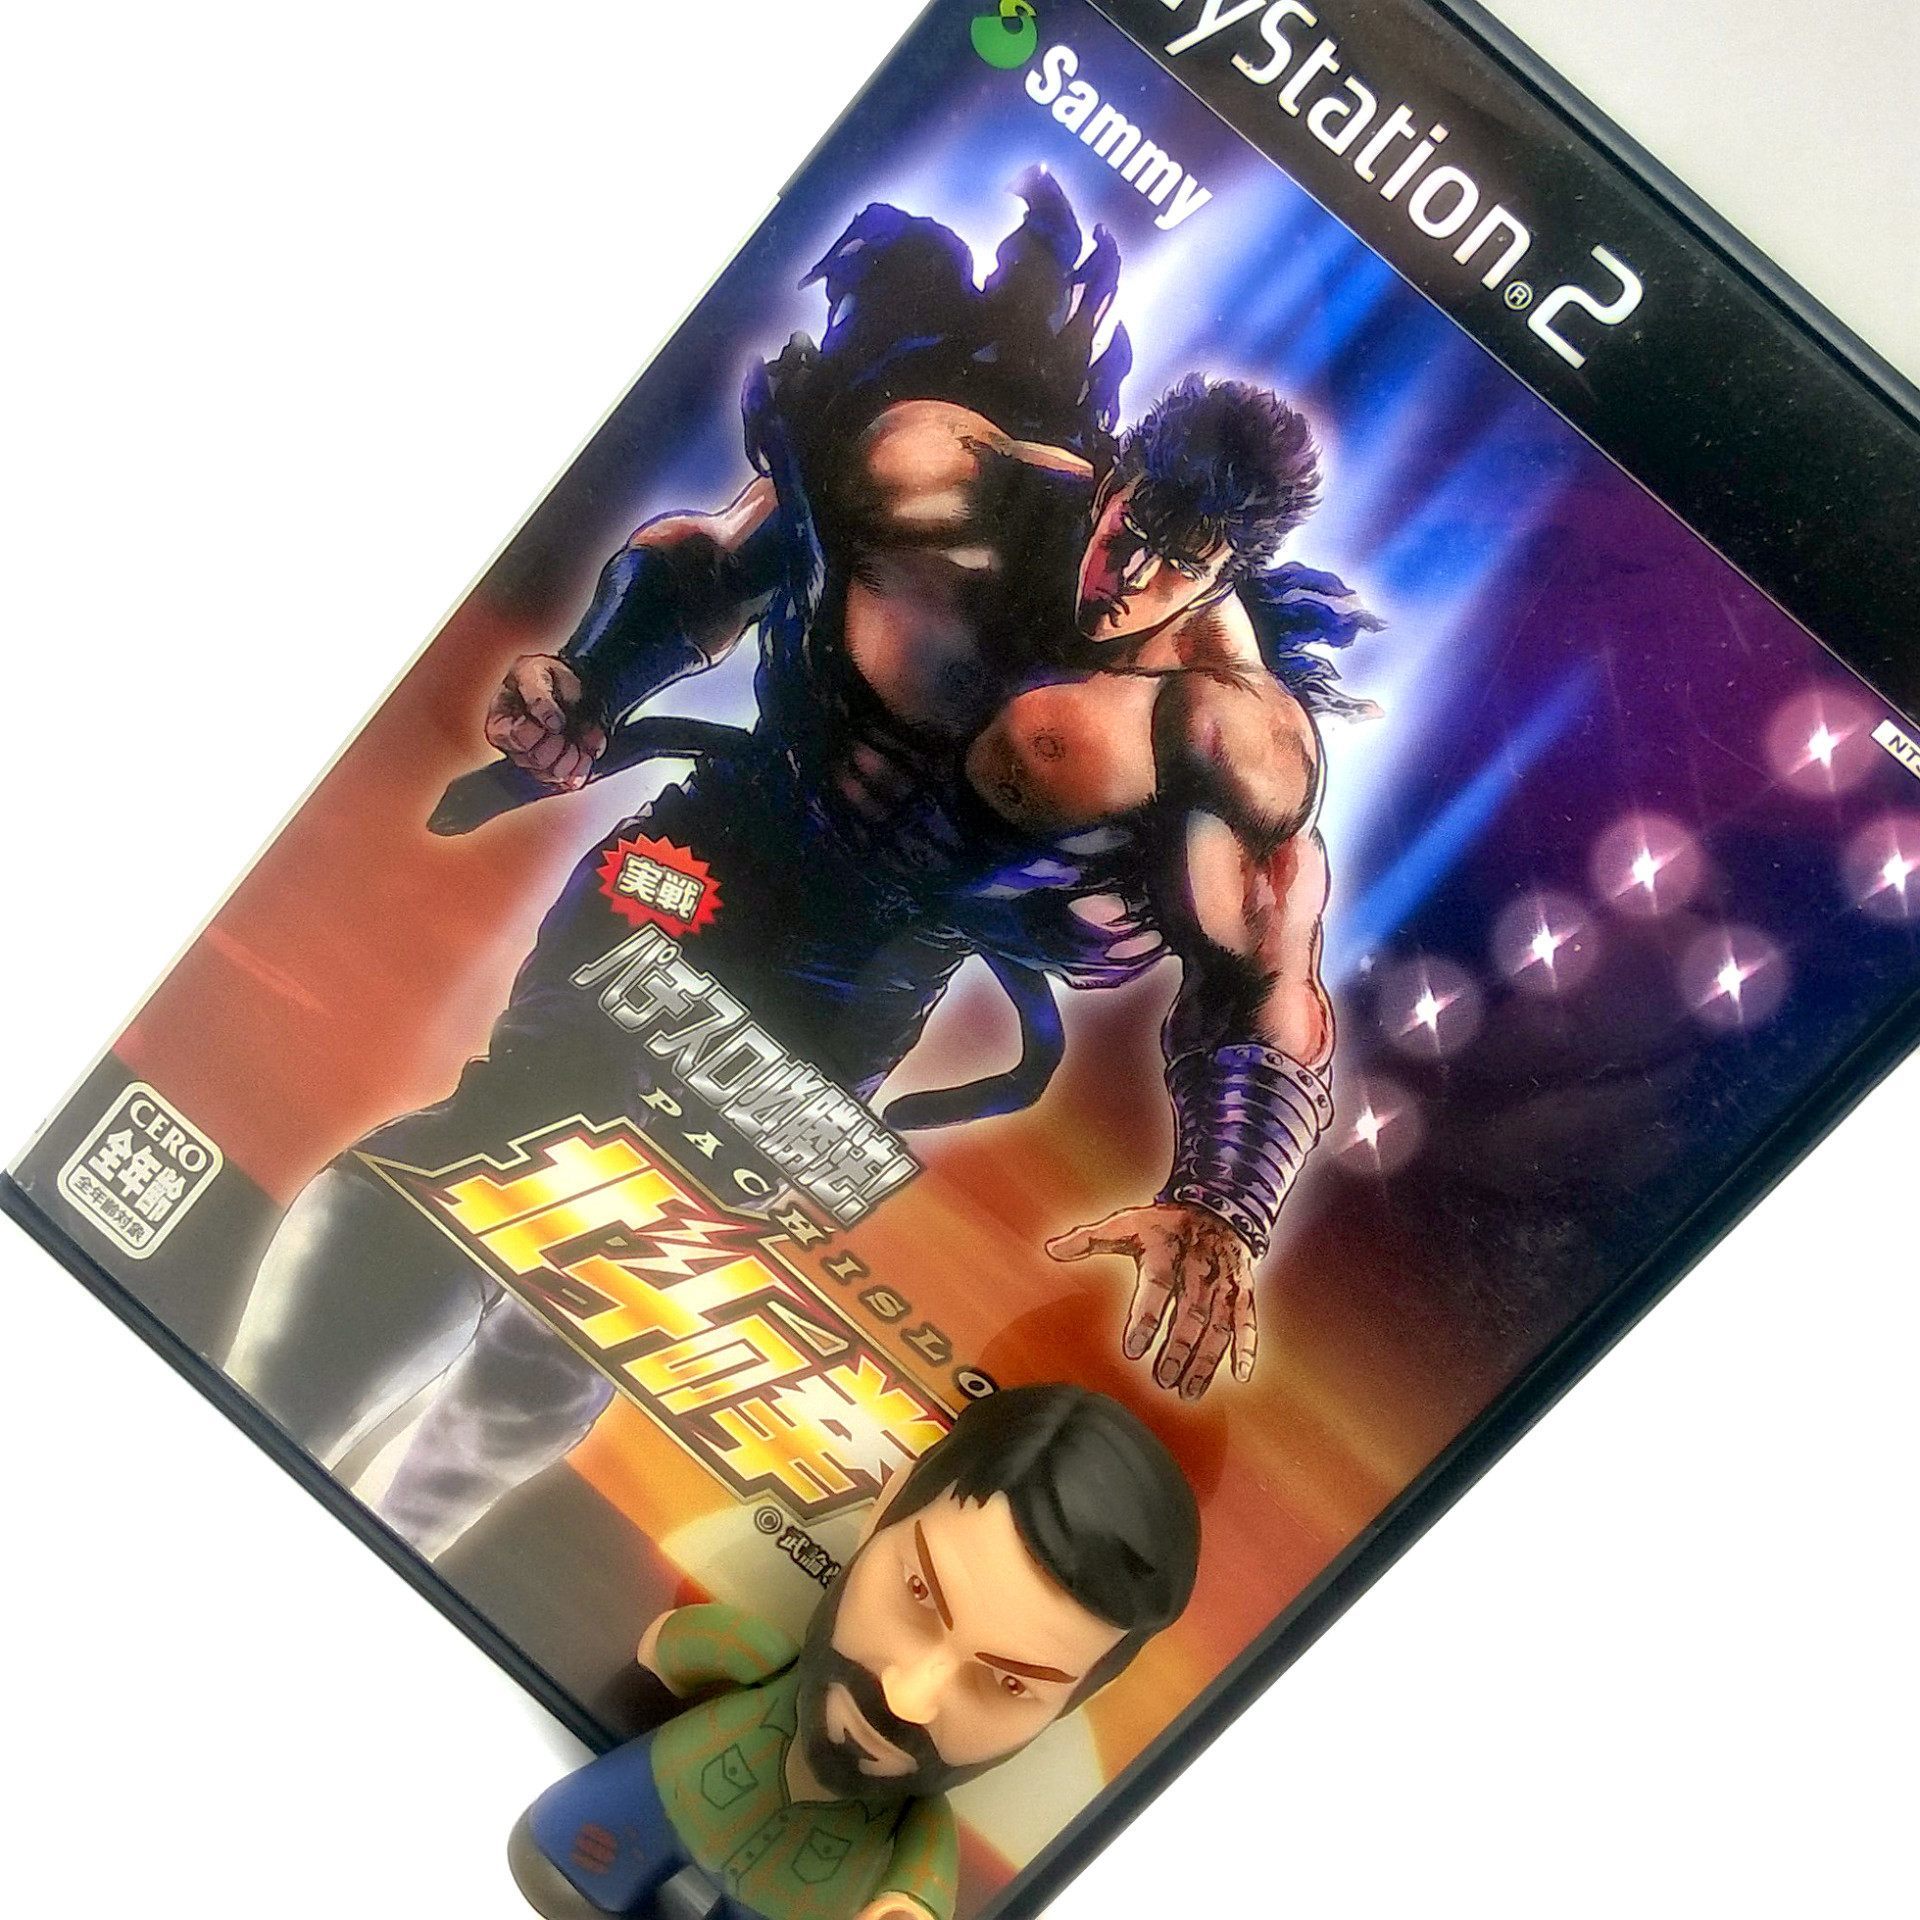 Jissen Pachi-Slot Hisshouhou: Hokuto no Ken Import Sony PlayStation 2 Game